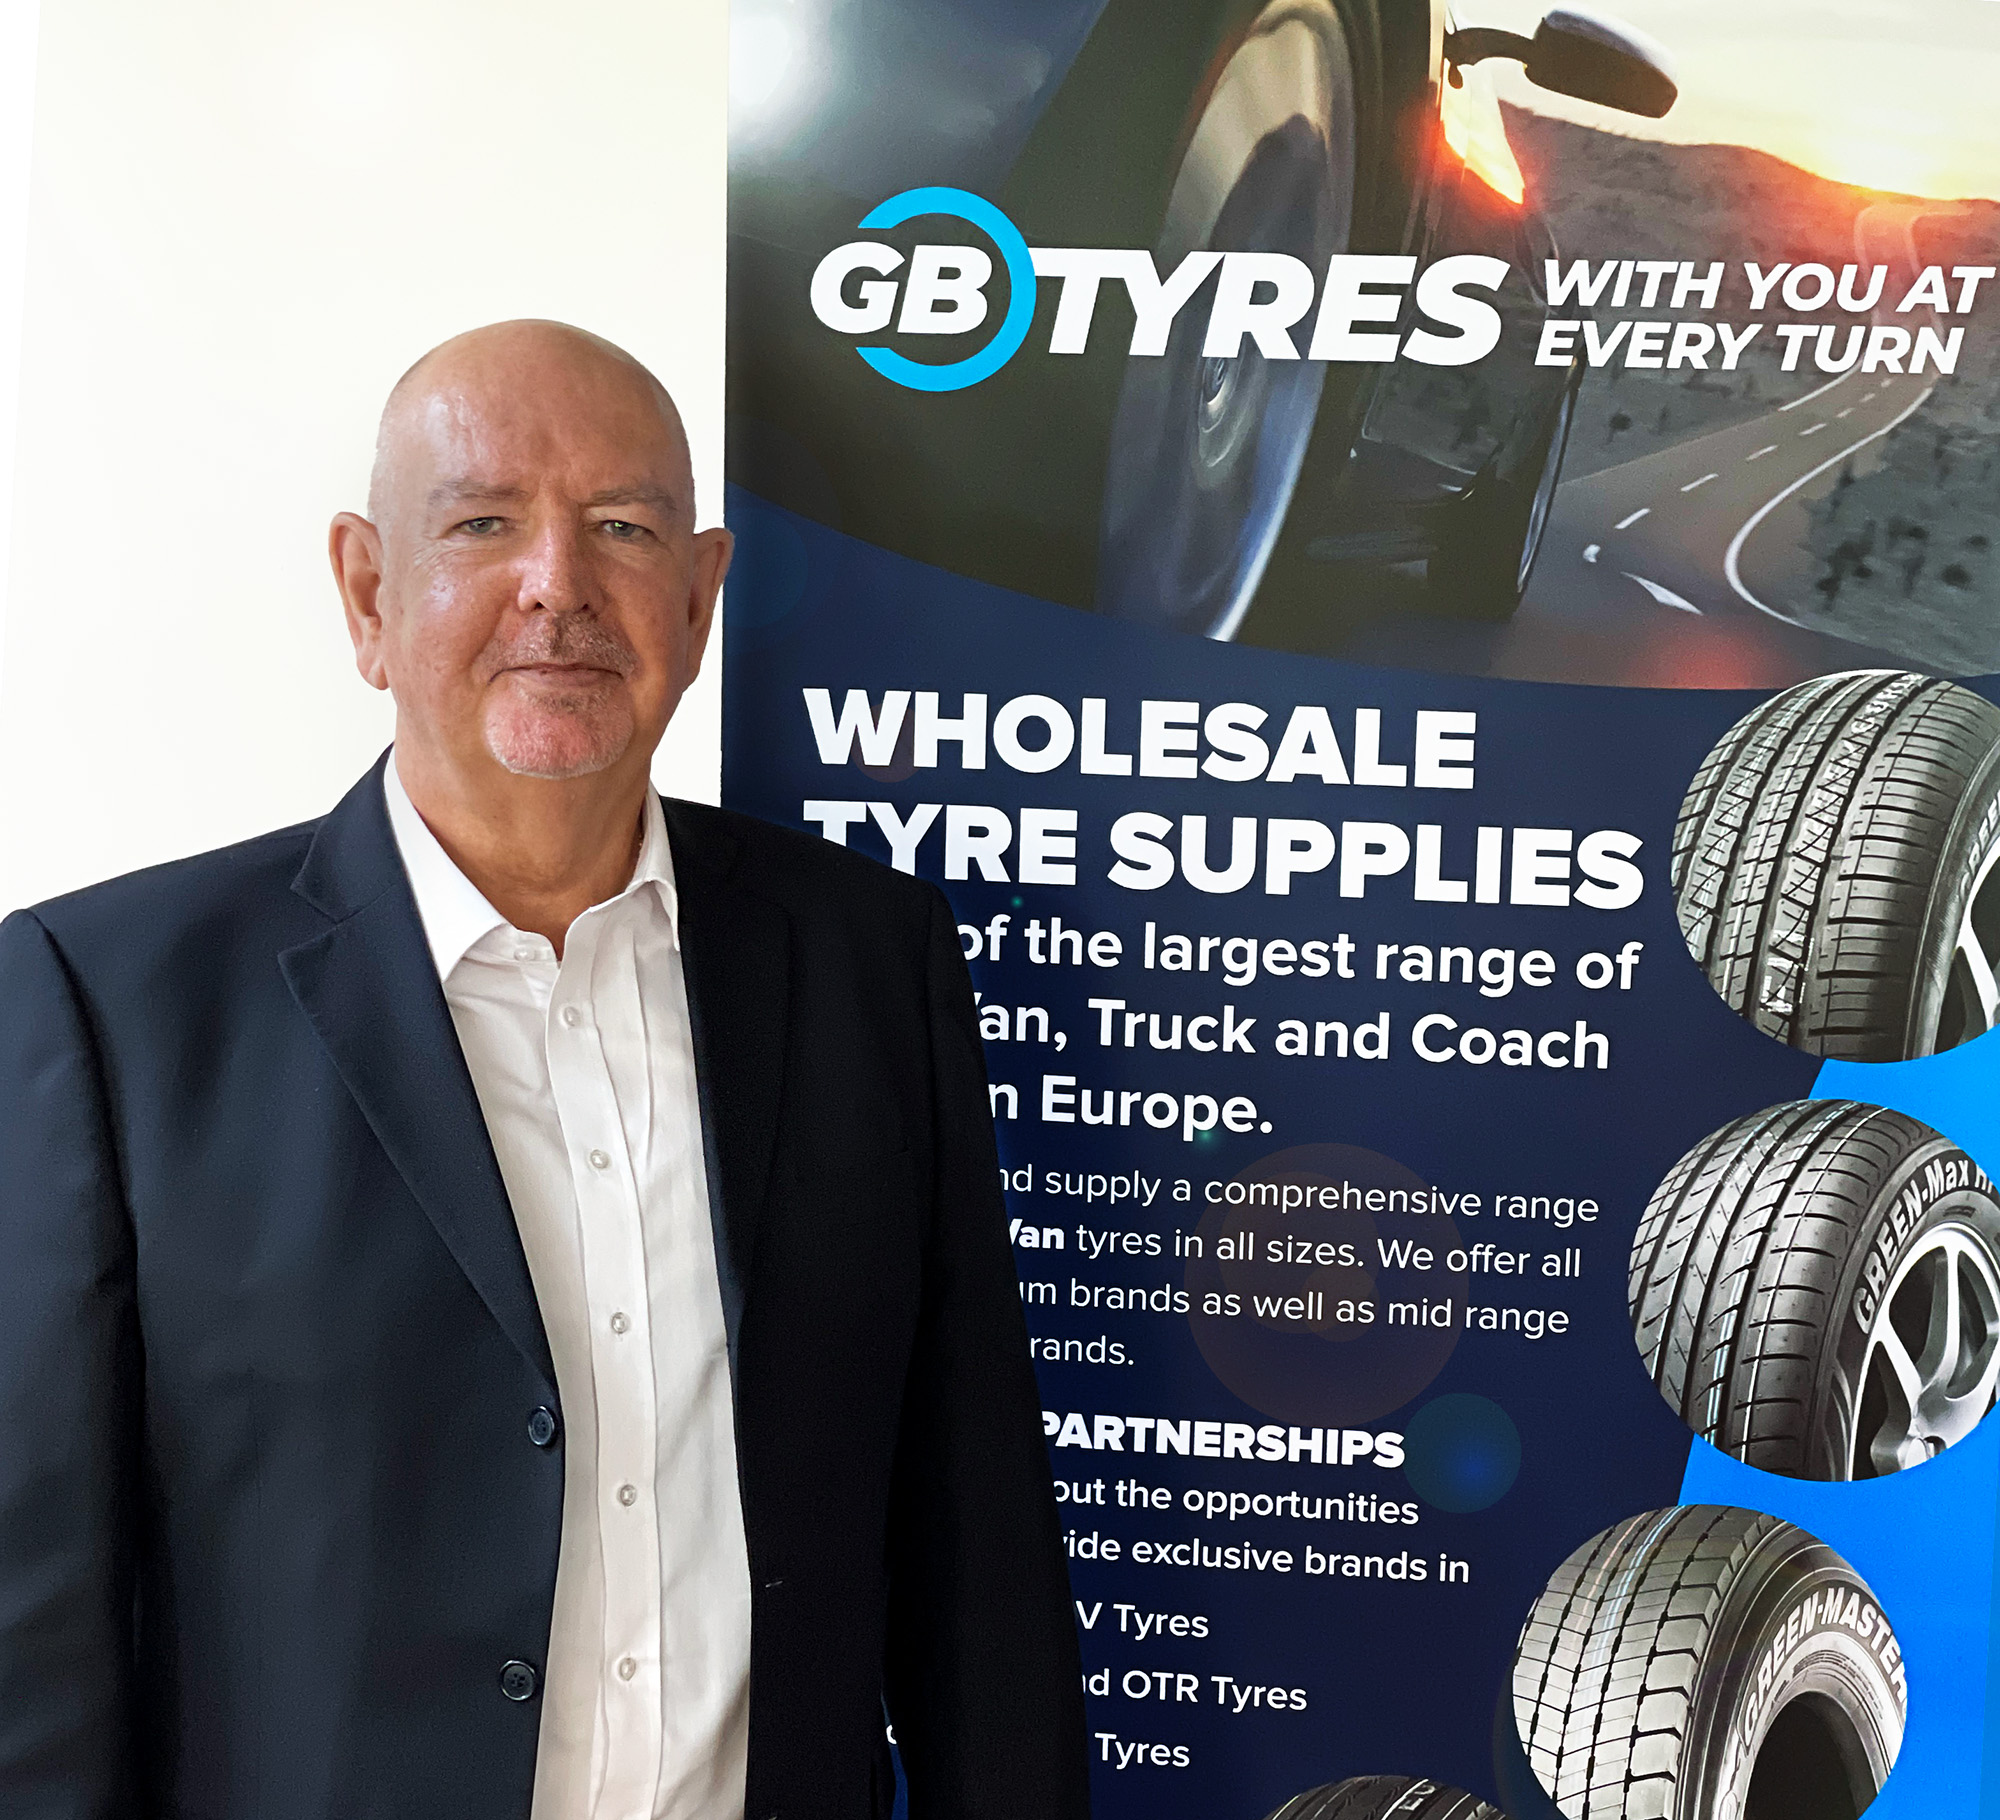 Eddie Fogarty Joins GB Tyres